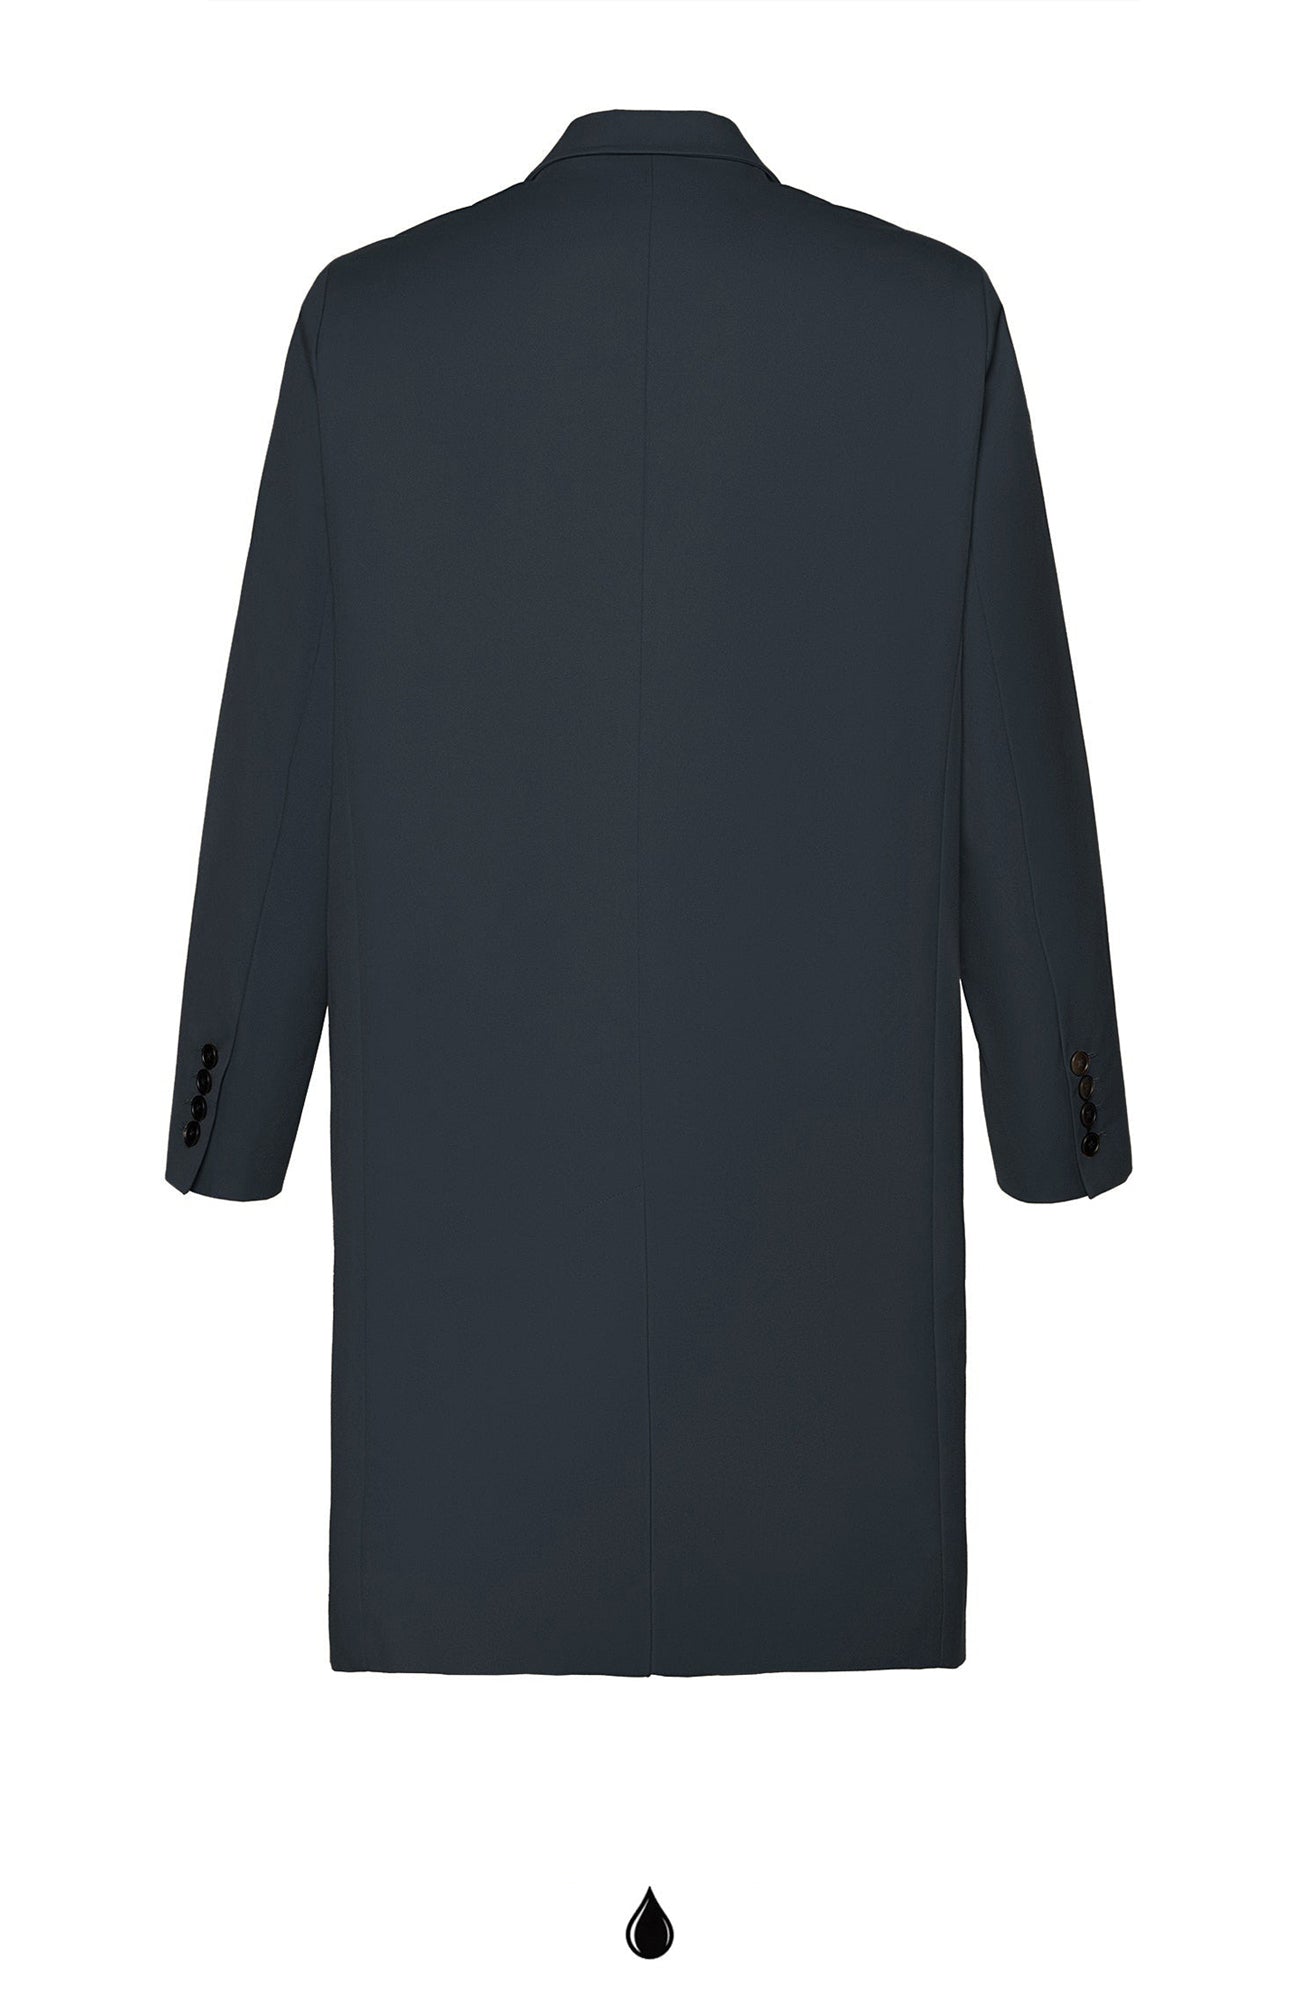 scottsdale navy raincoat 41.5 inches length